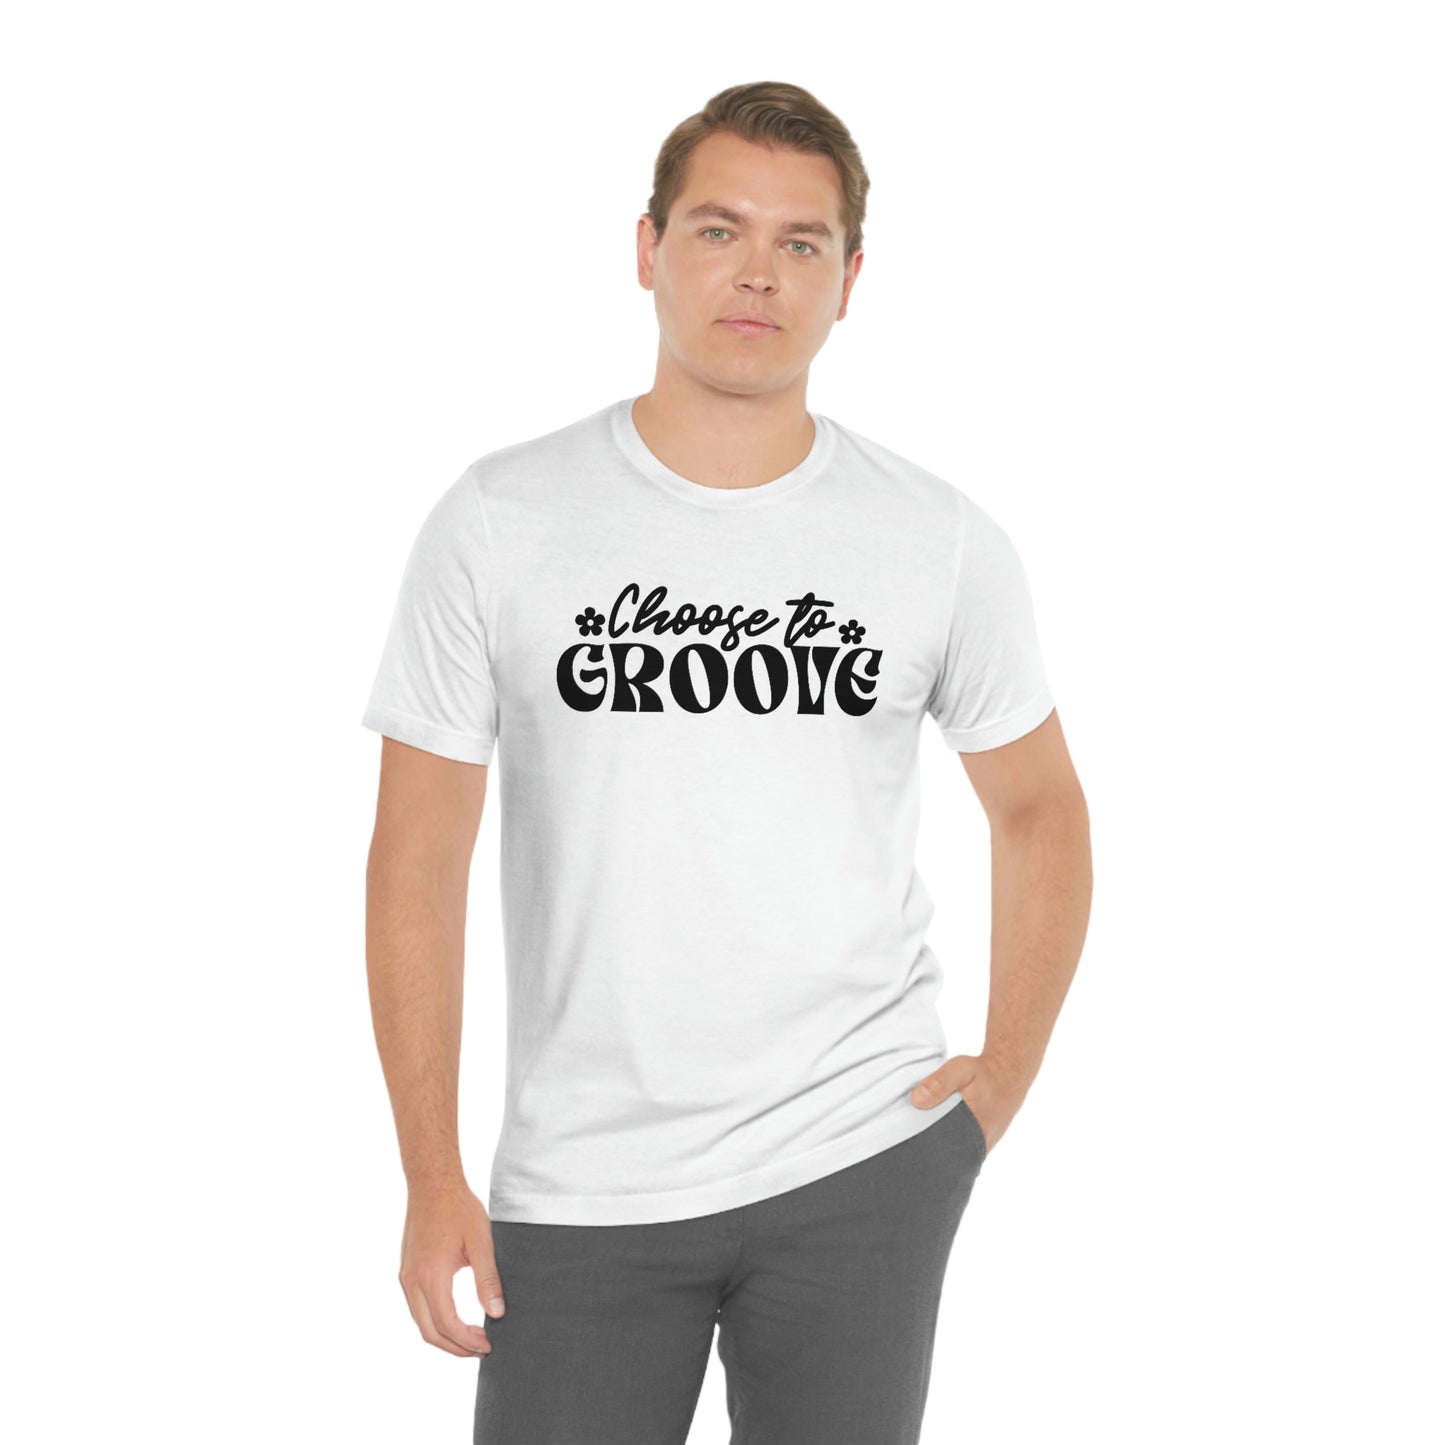 Choose to Groove Unisex Jersey Short Sleeve Tee